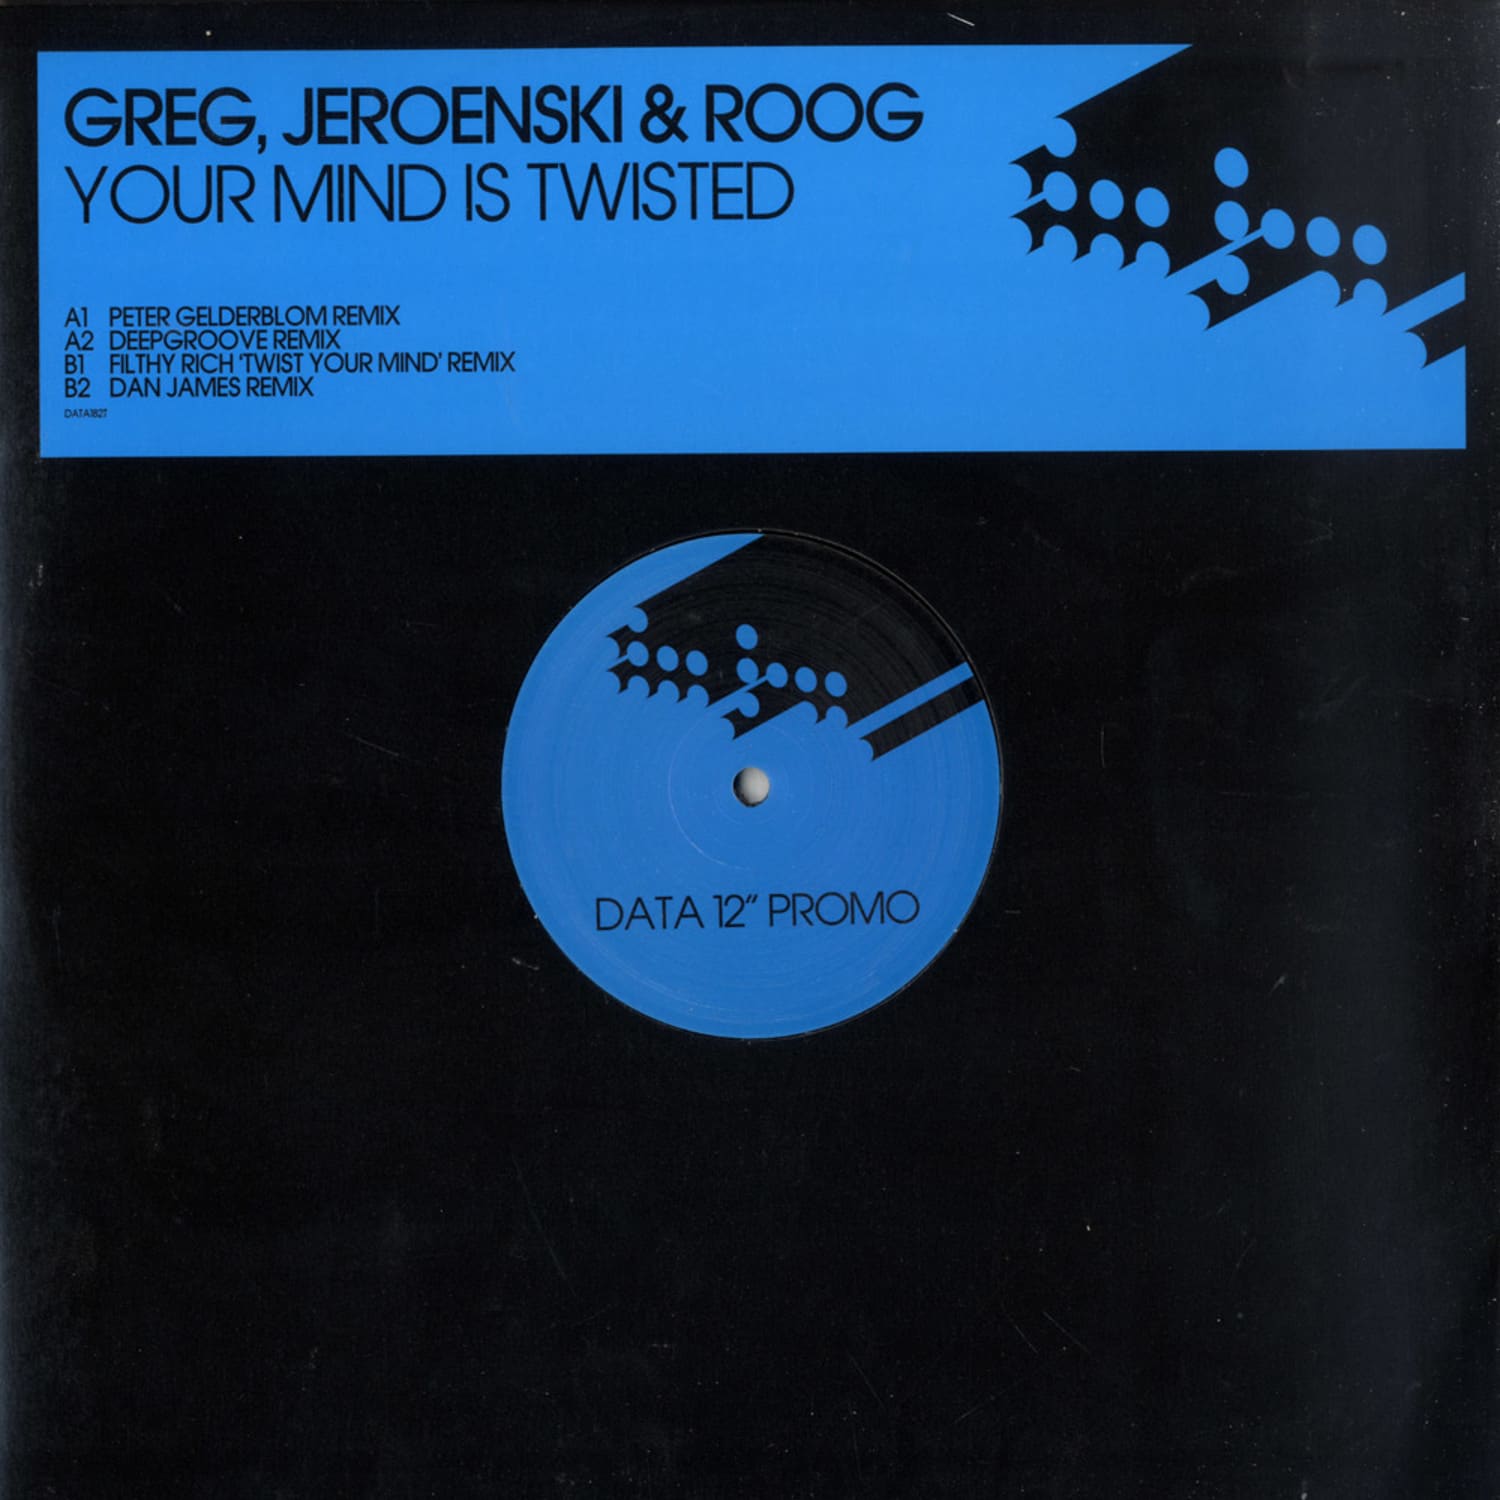 Greg, Jeroenski & Roog - YOUR MIND IS TWISTED